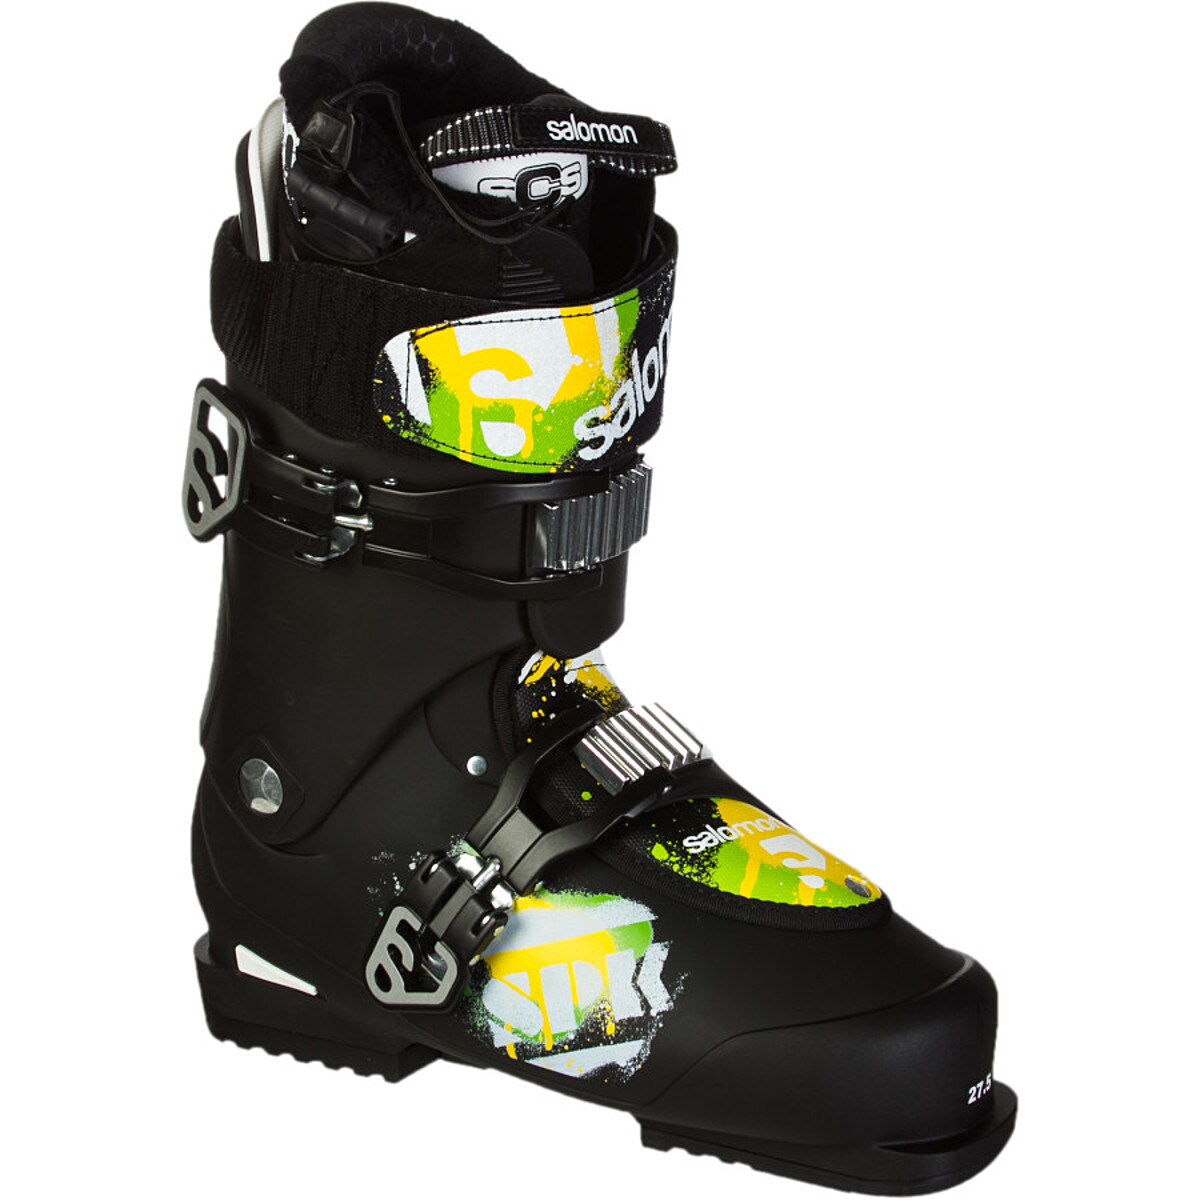 Salomon SPK 85 Boot - Men's - Ski